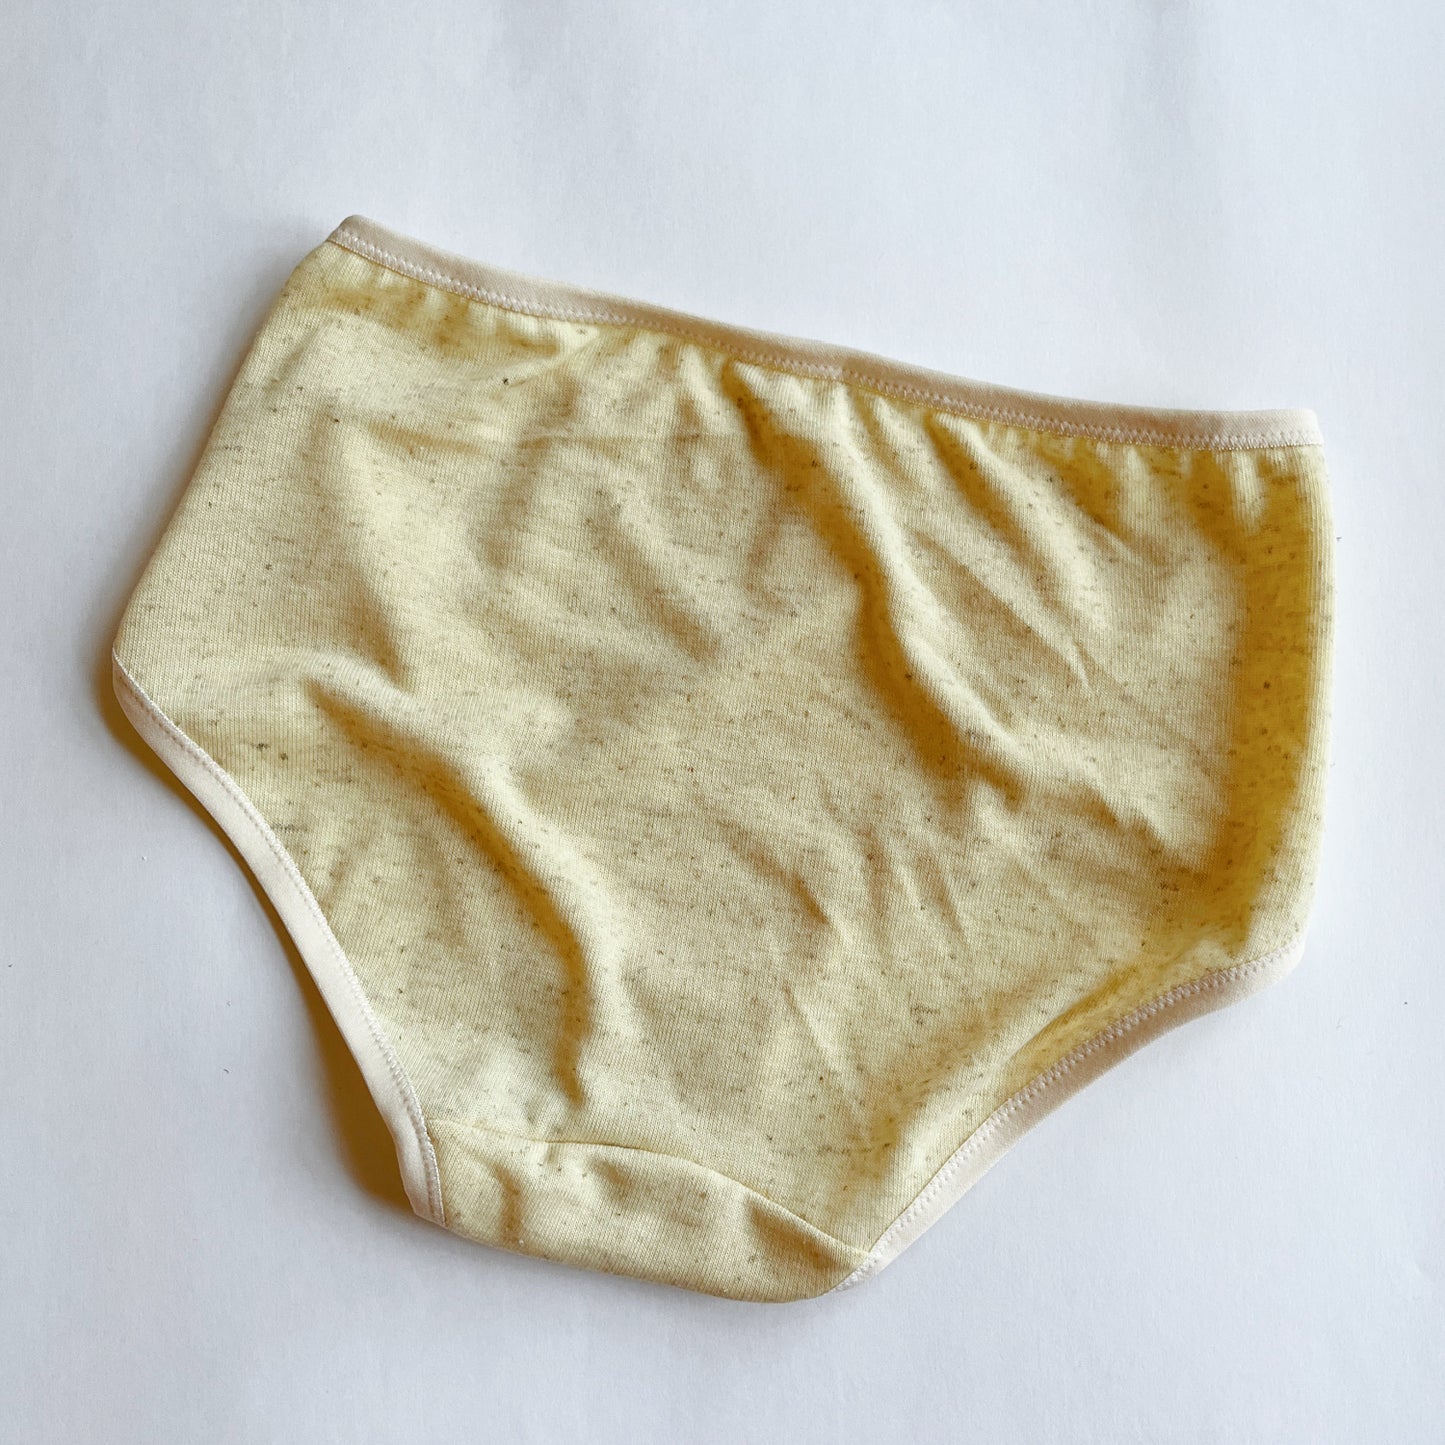 Mustard Yellow Women's Underpants, Comfortable Organic Cotton Jersey Lounge  Panties, Elastic Free Underwear Boyleg and Brief Style -  Canada